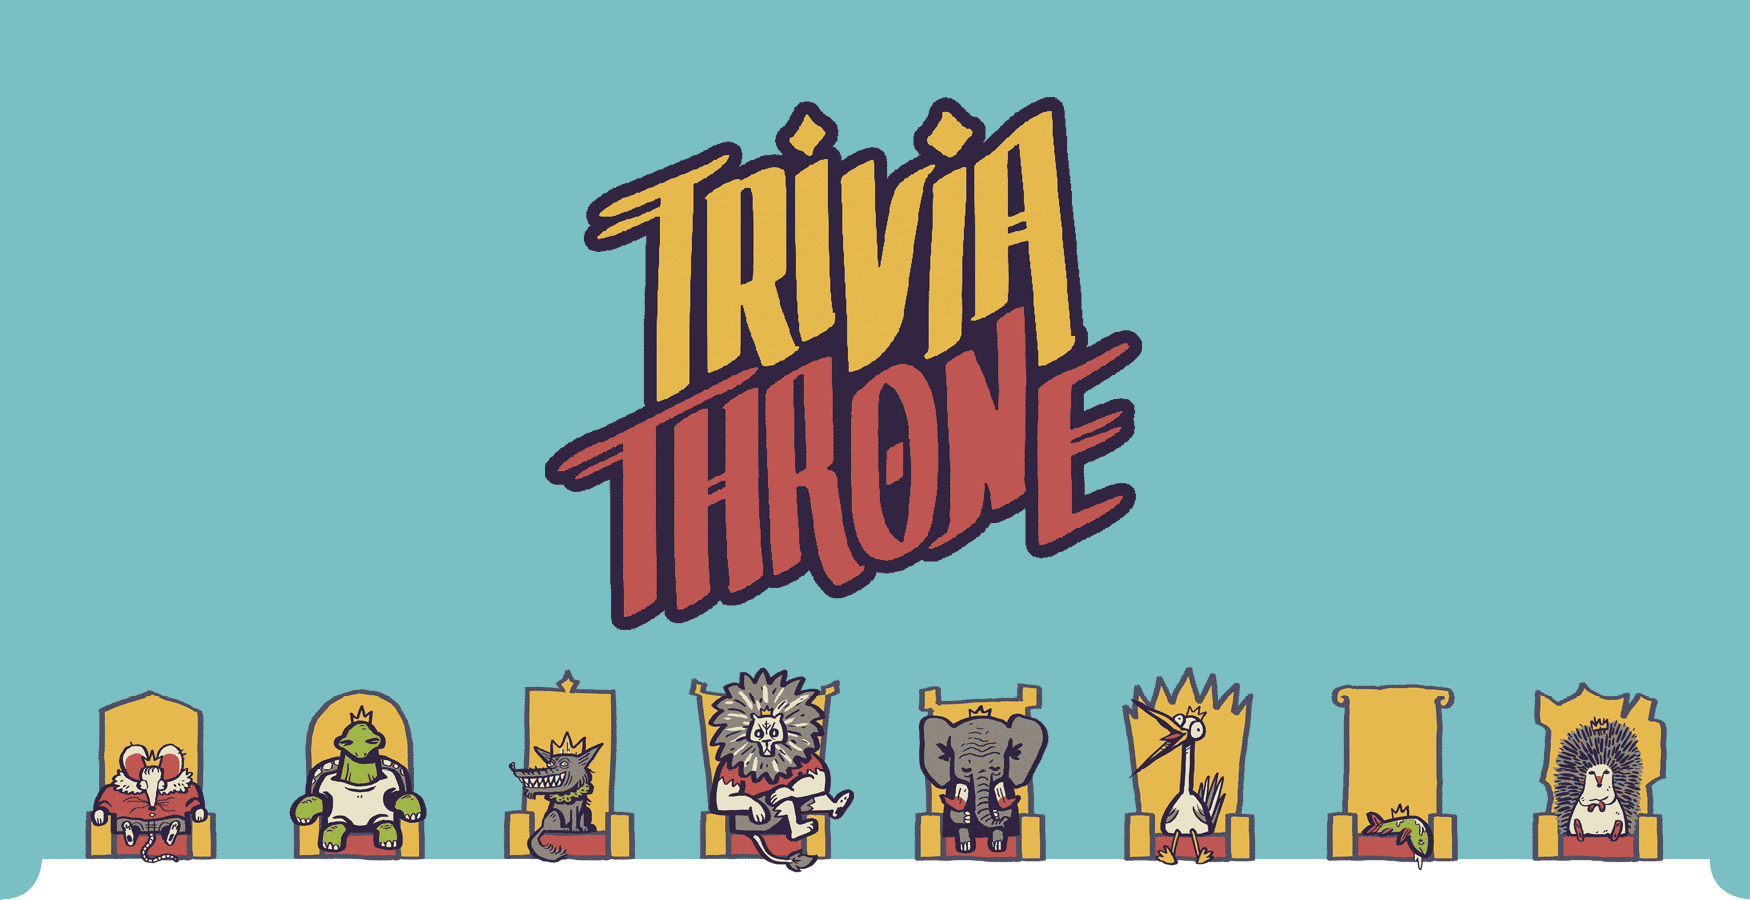 Trivia Throne